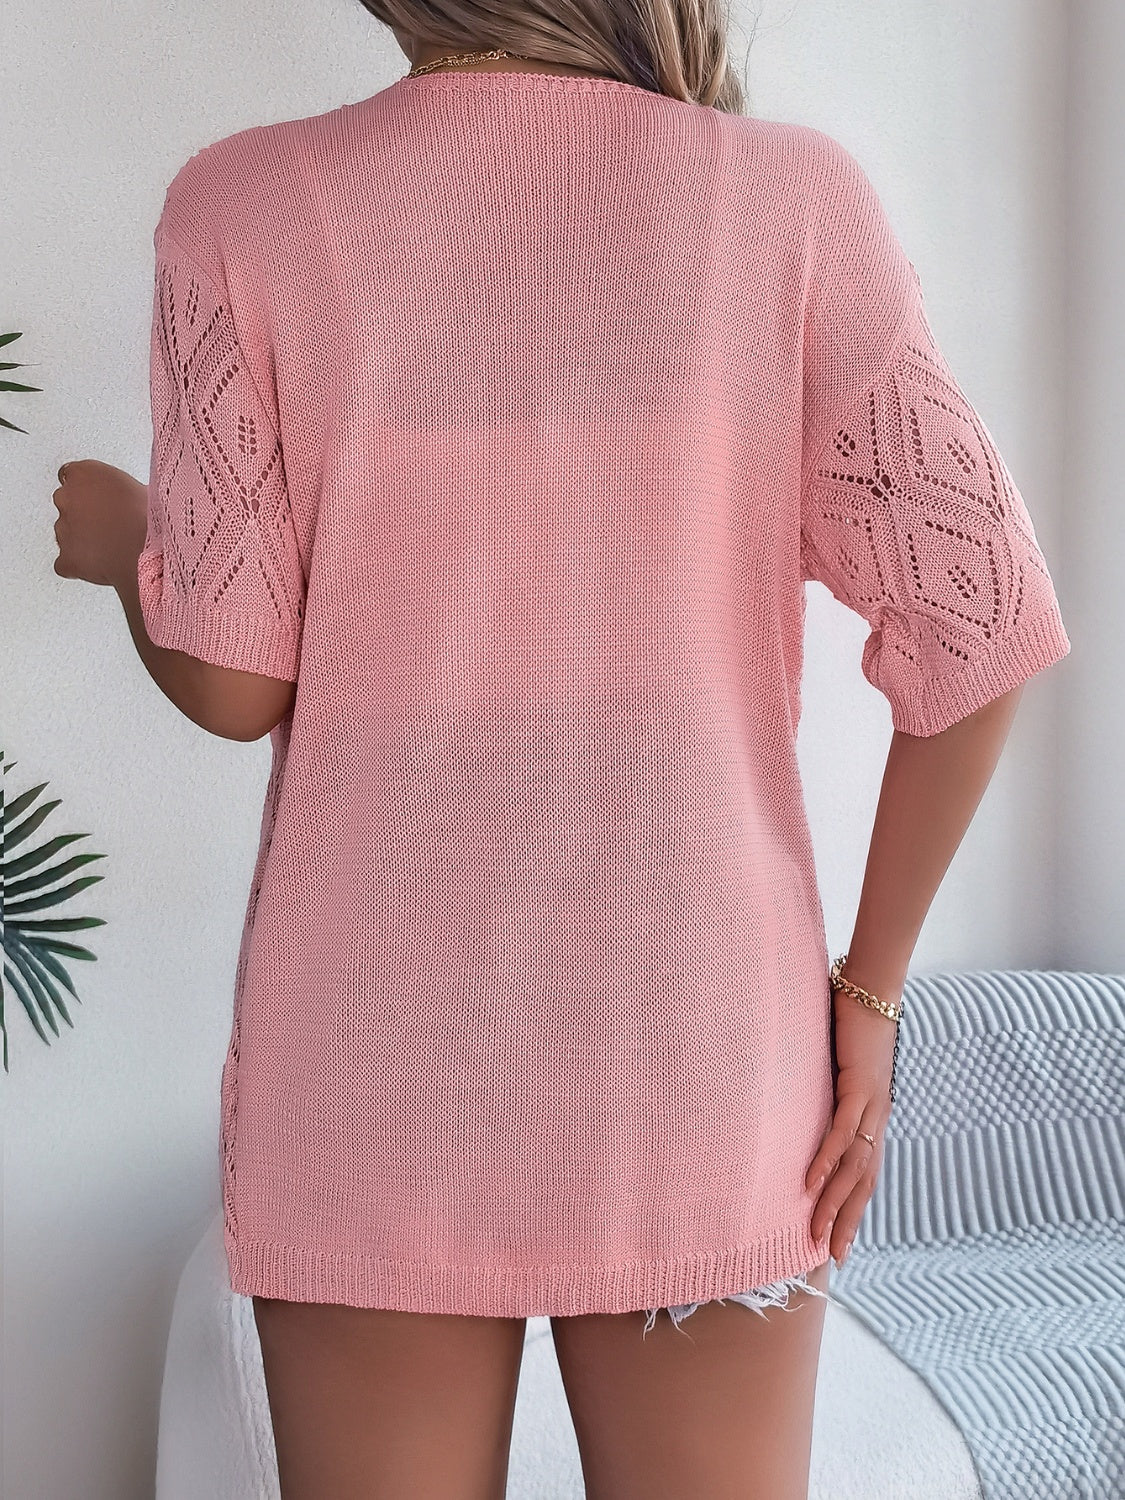 TEEK - Lace Open Front Half Sleeve Cardigan SWEATER TEEK Trend Blush Pink S 